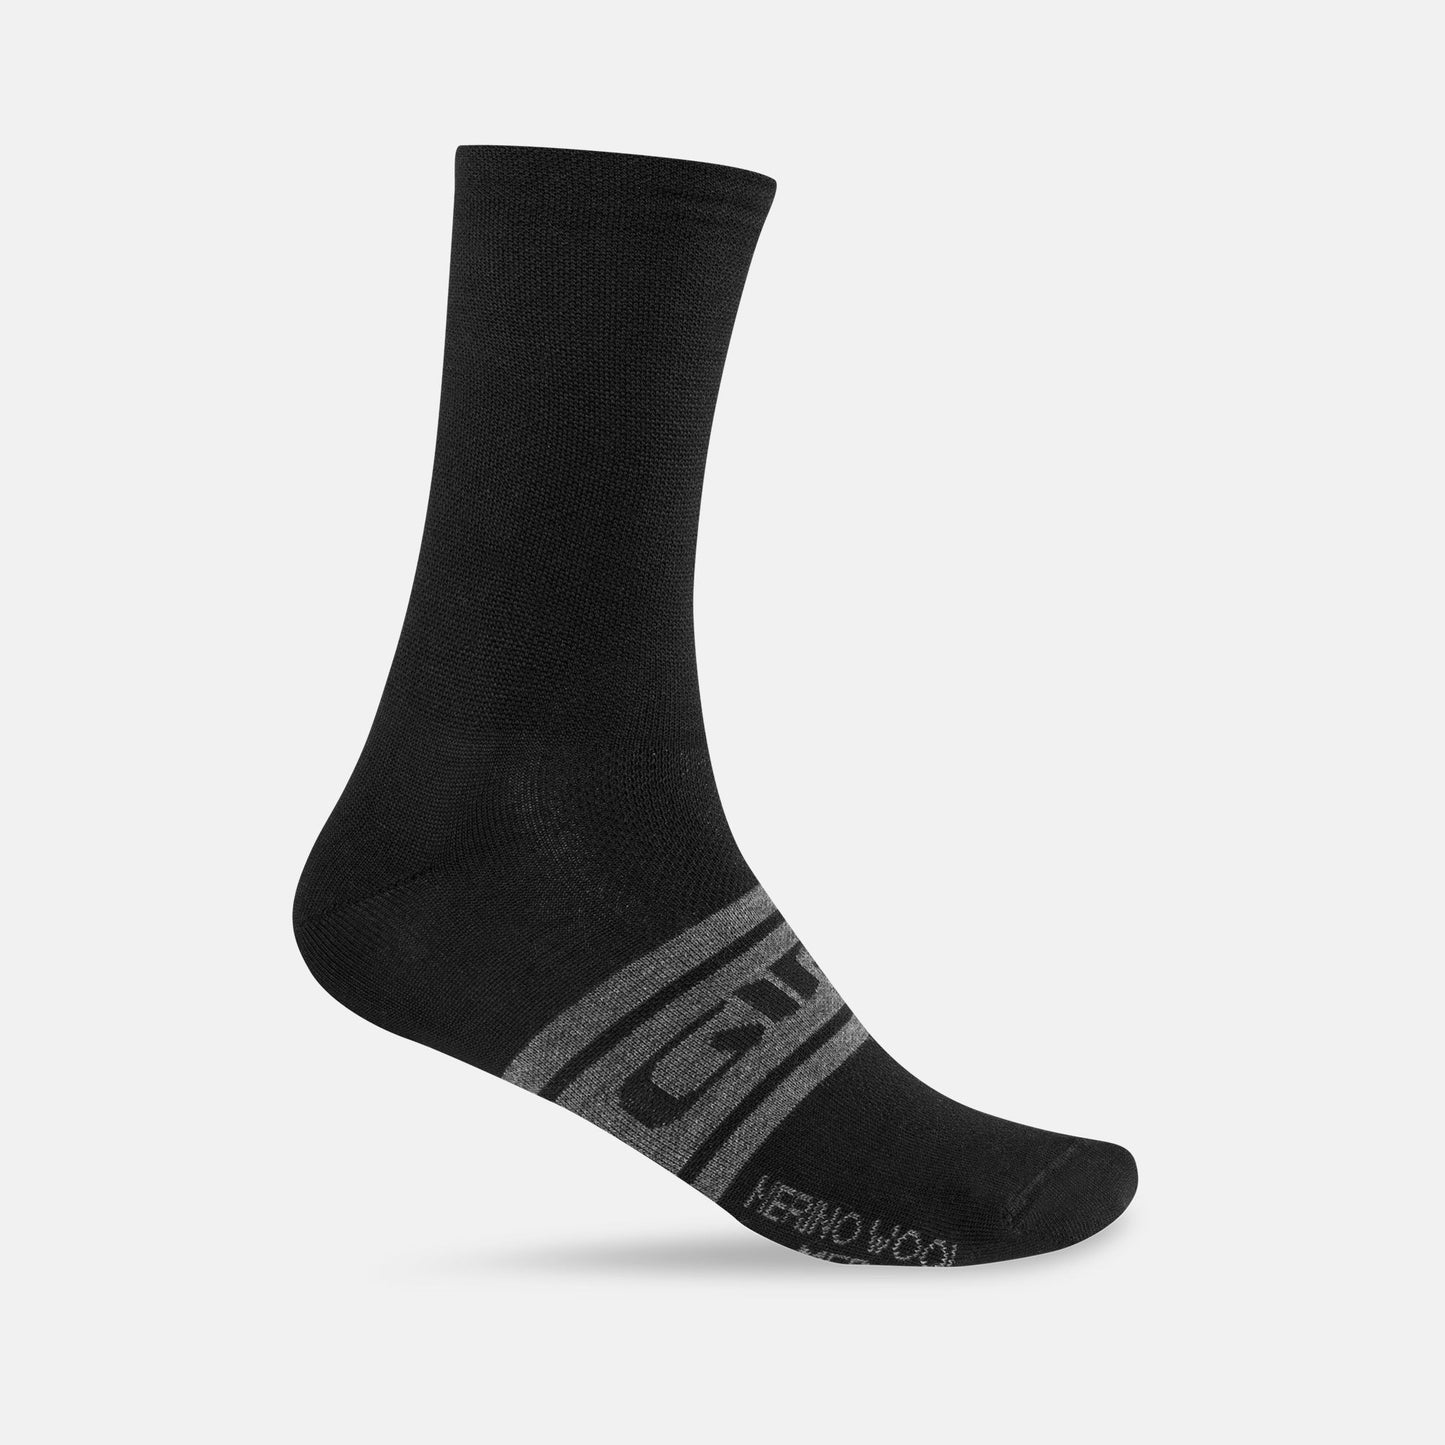 Giro Seasonal Merino Wool Socks - Black/Charcoal - Size XL